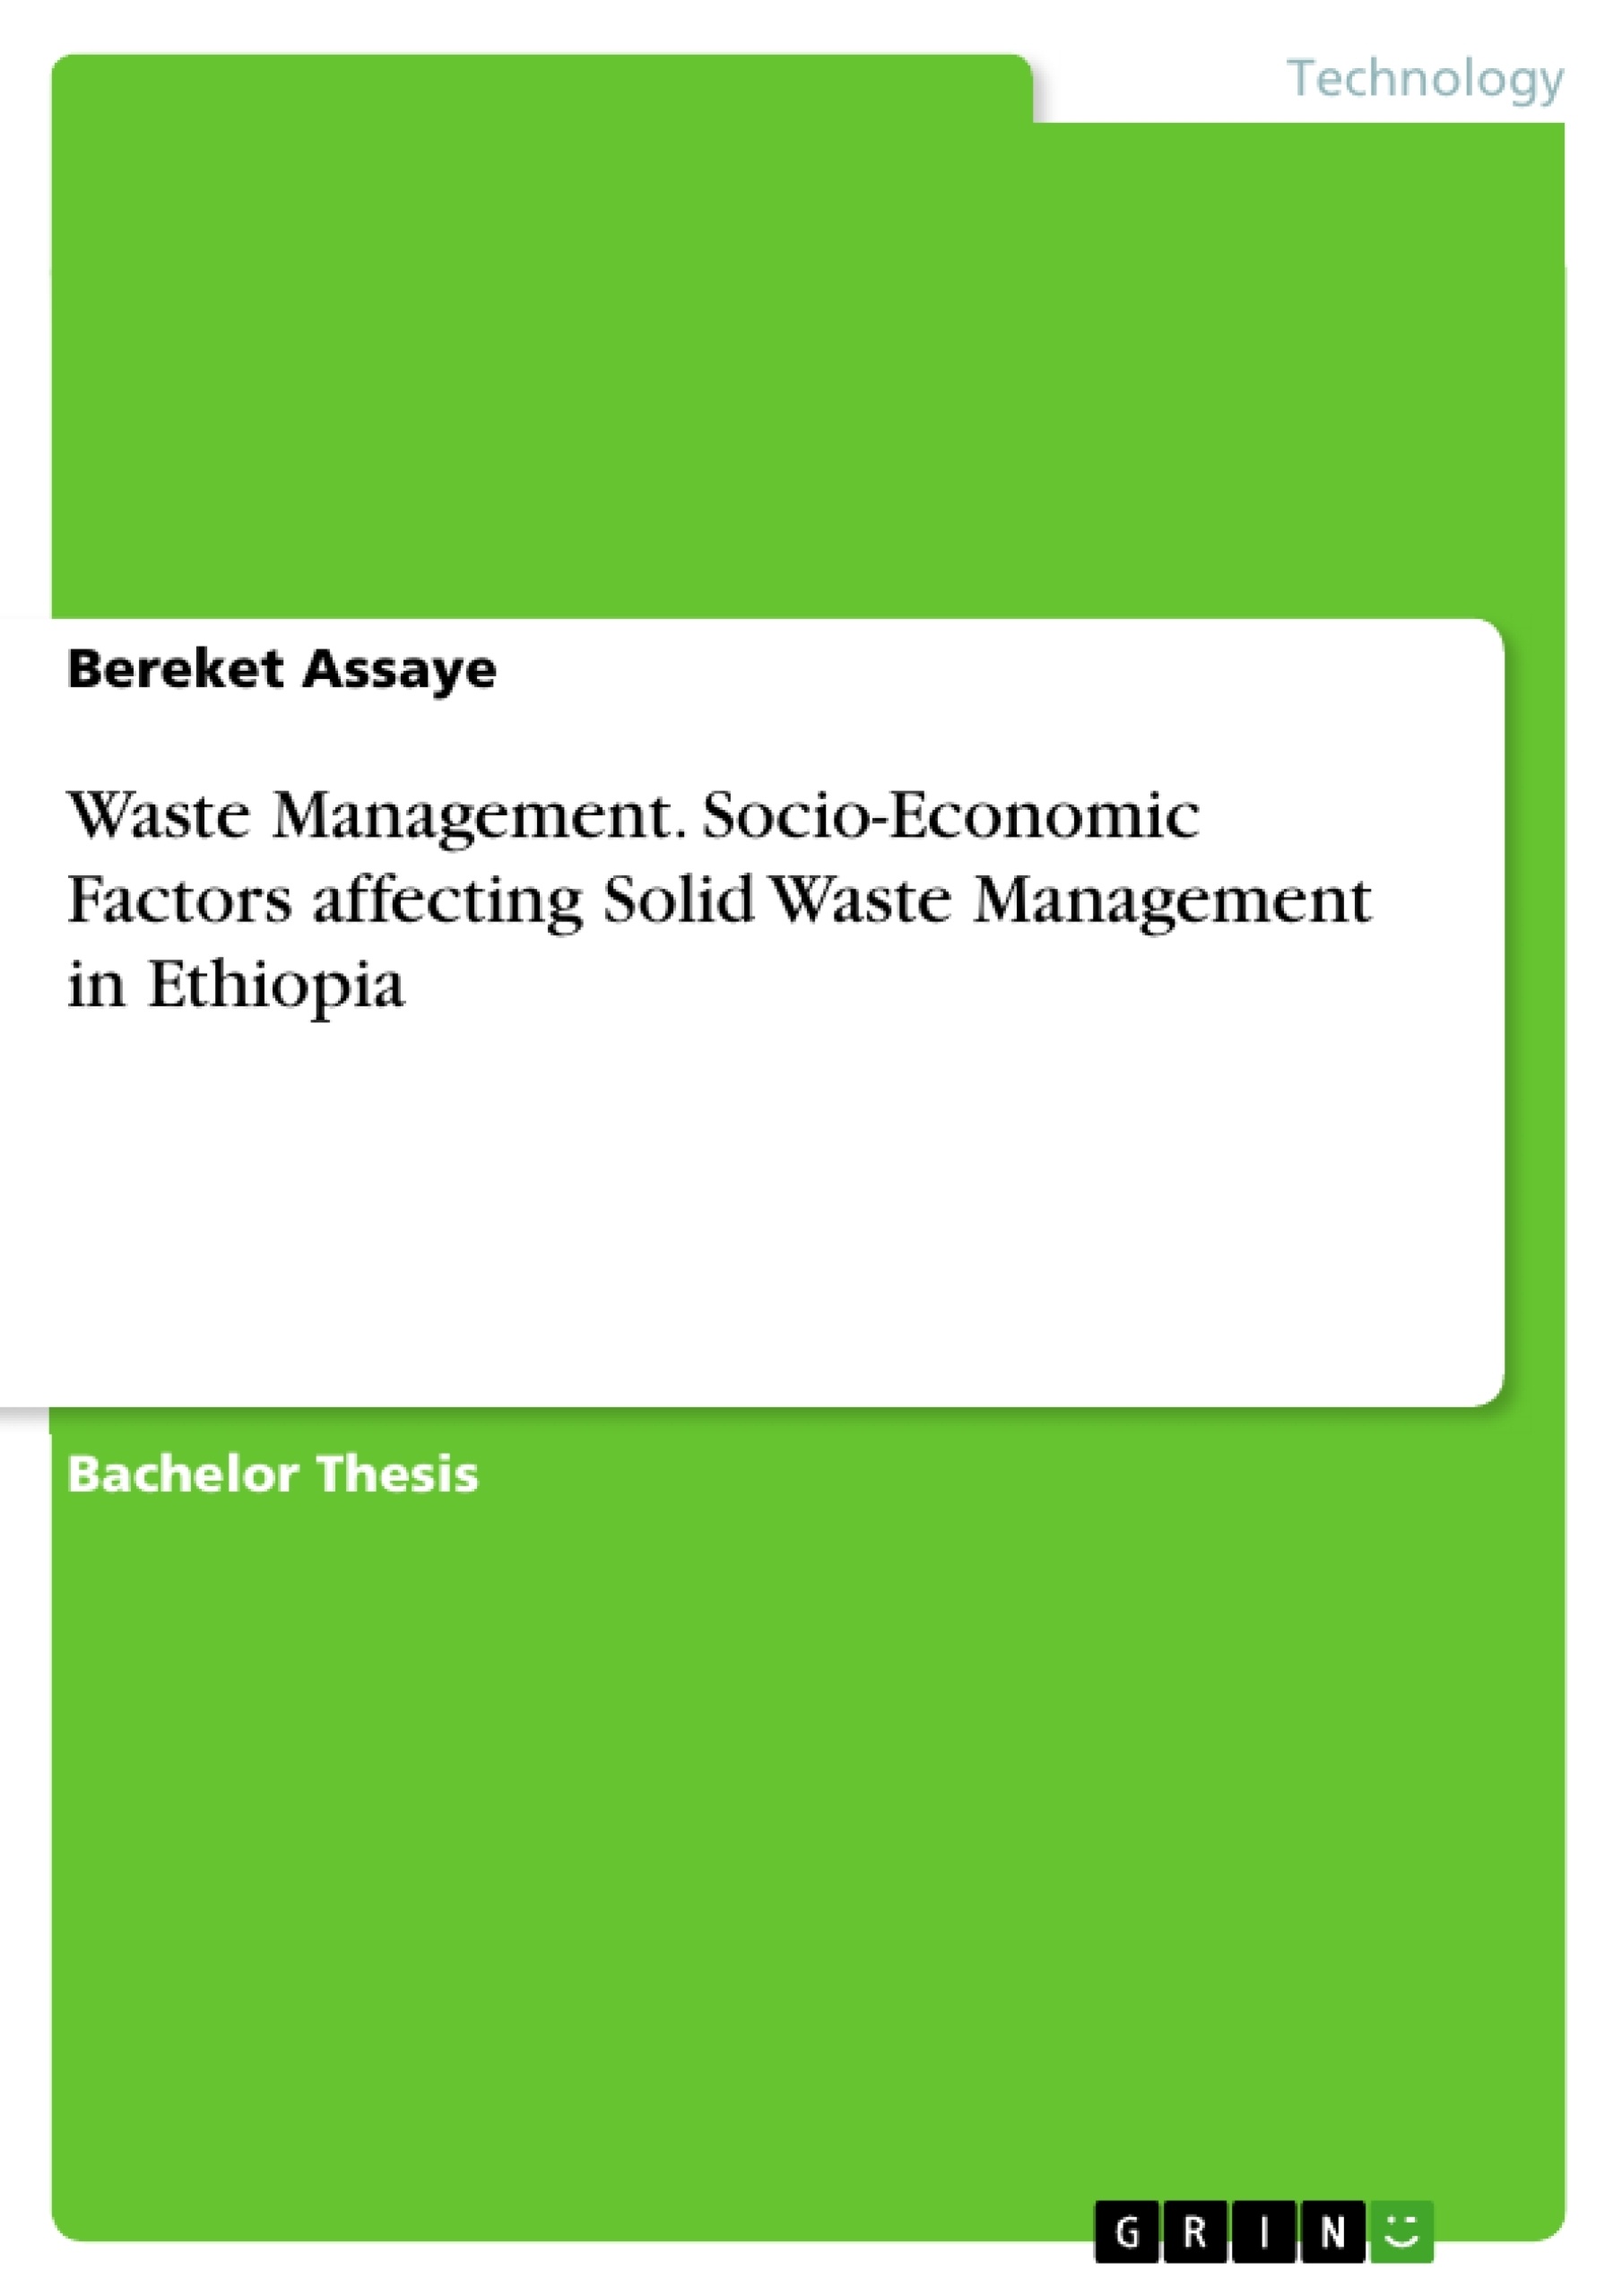 Title: Waste Management. Socio-Economic Factors affecting Solid Waste Management in Ethiopia